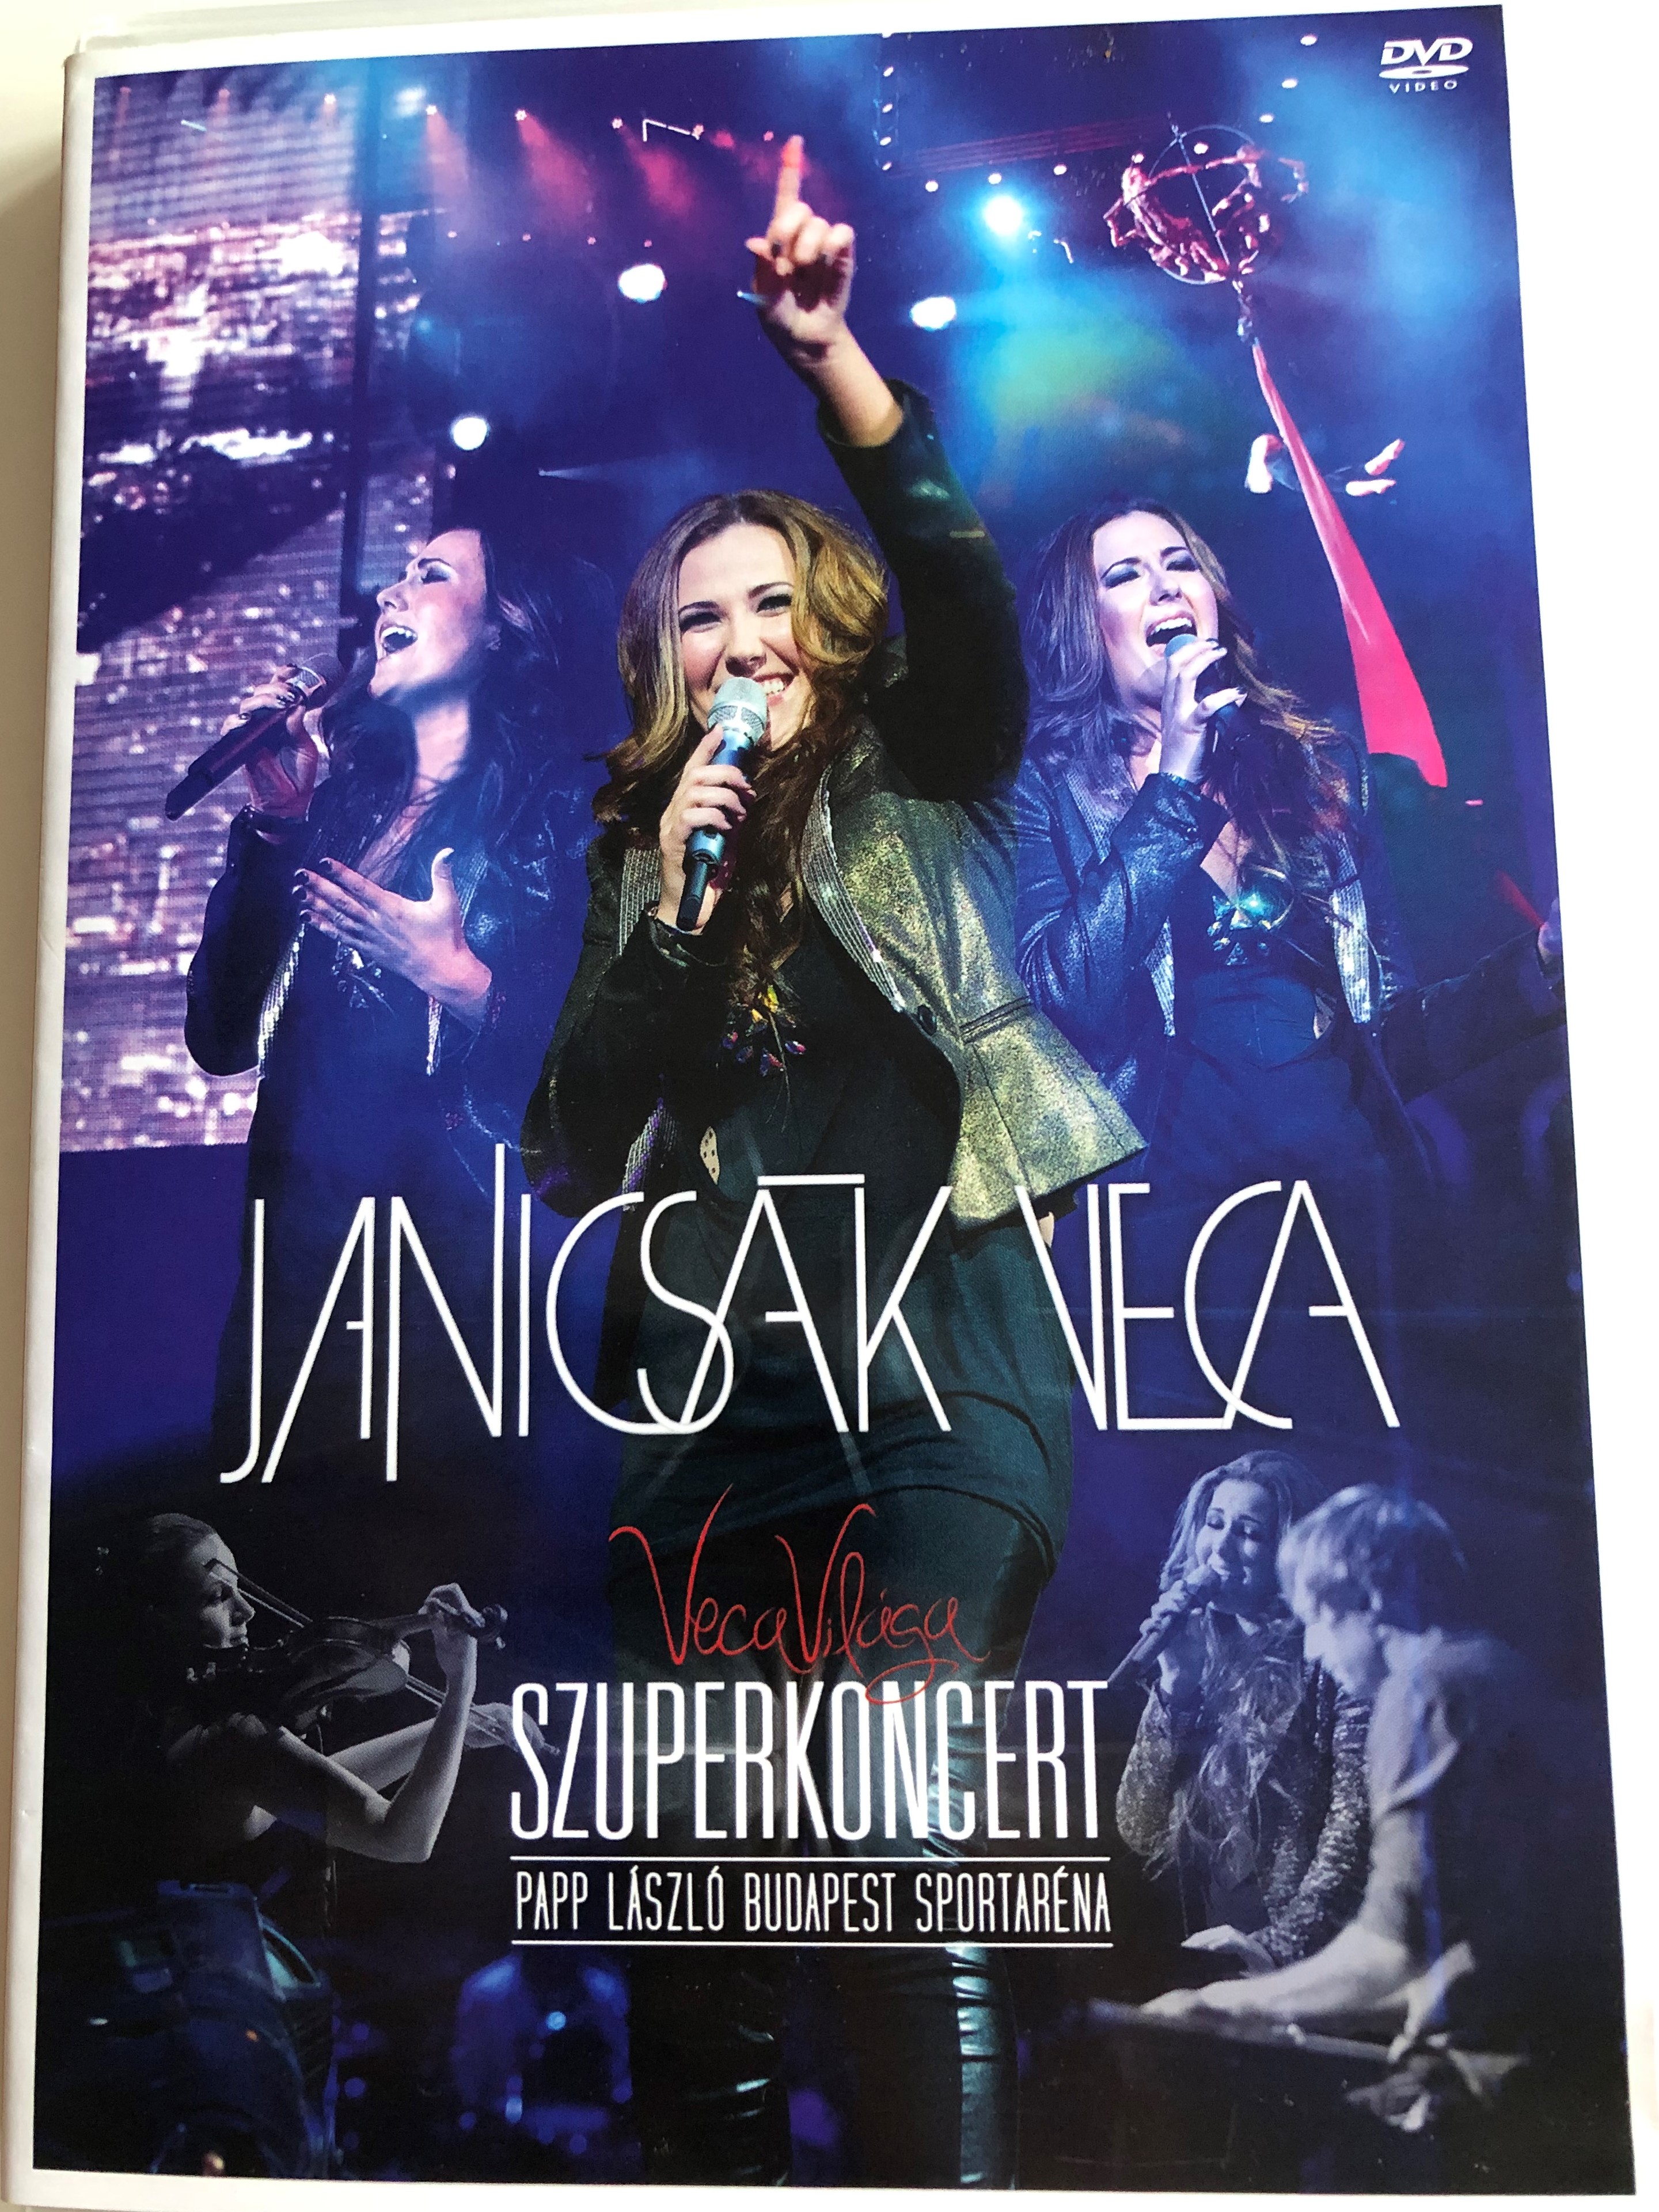 janics-k-veca-veca-vil-ga-szuperkoncert-dvd-2012-papp-l-szl-budapest-sportar-na-1.jpg